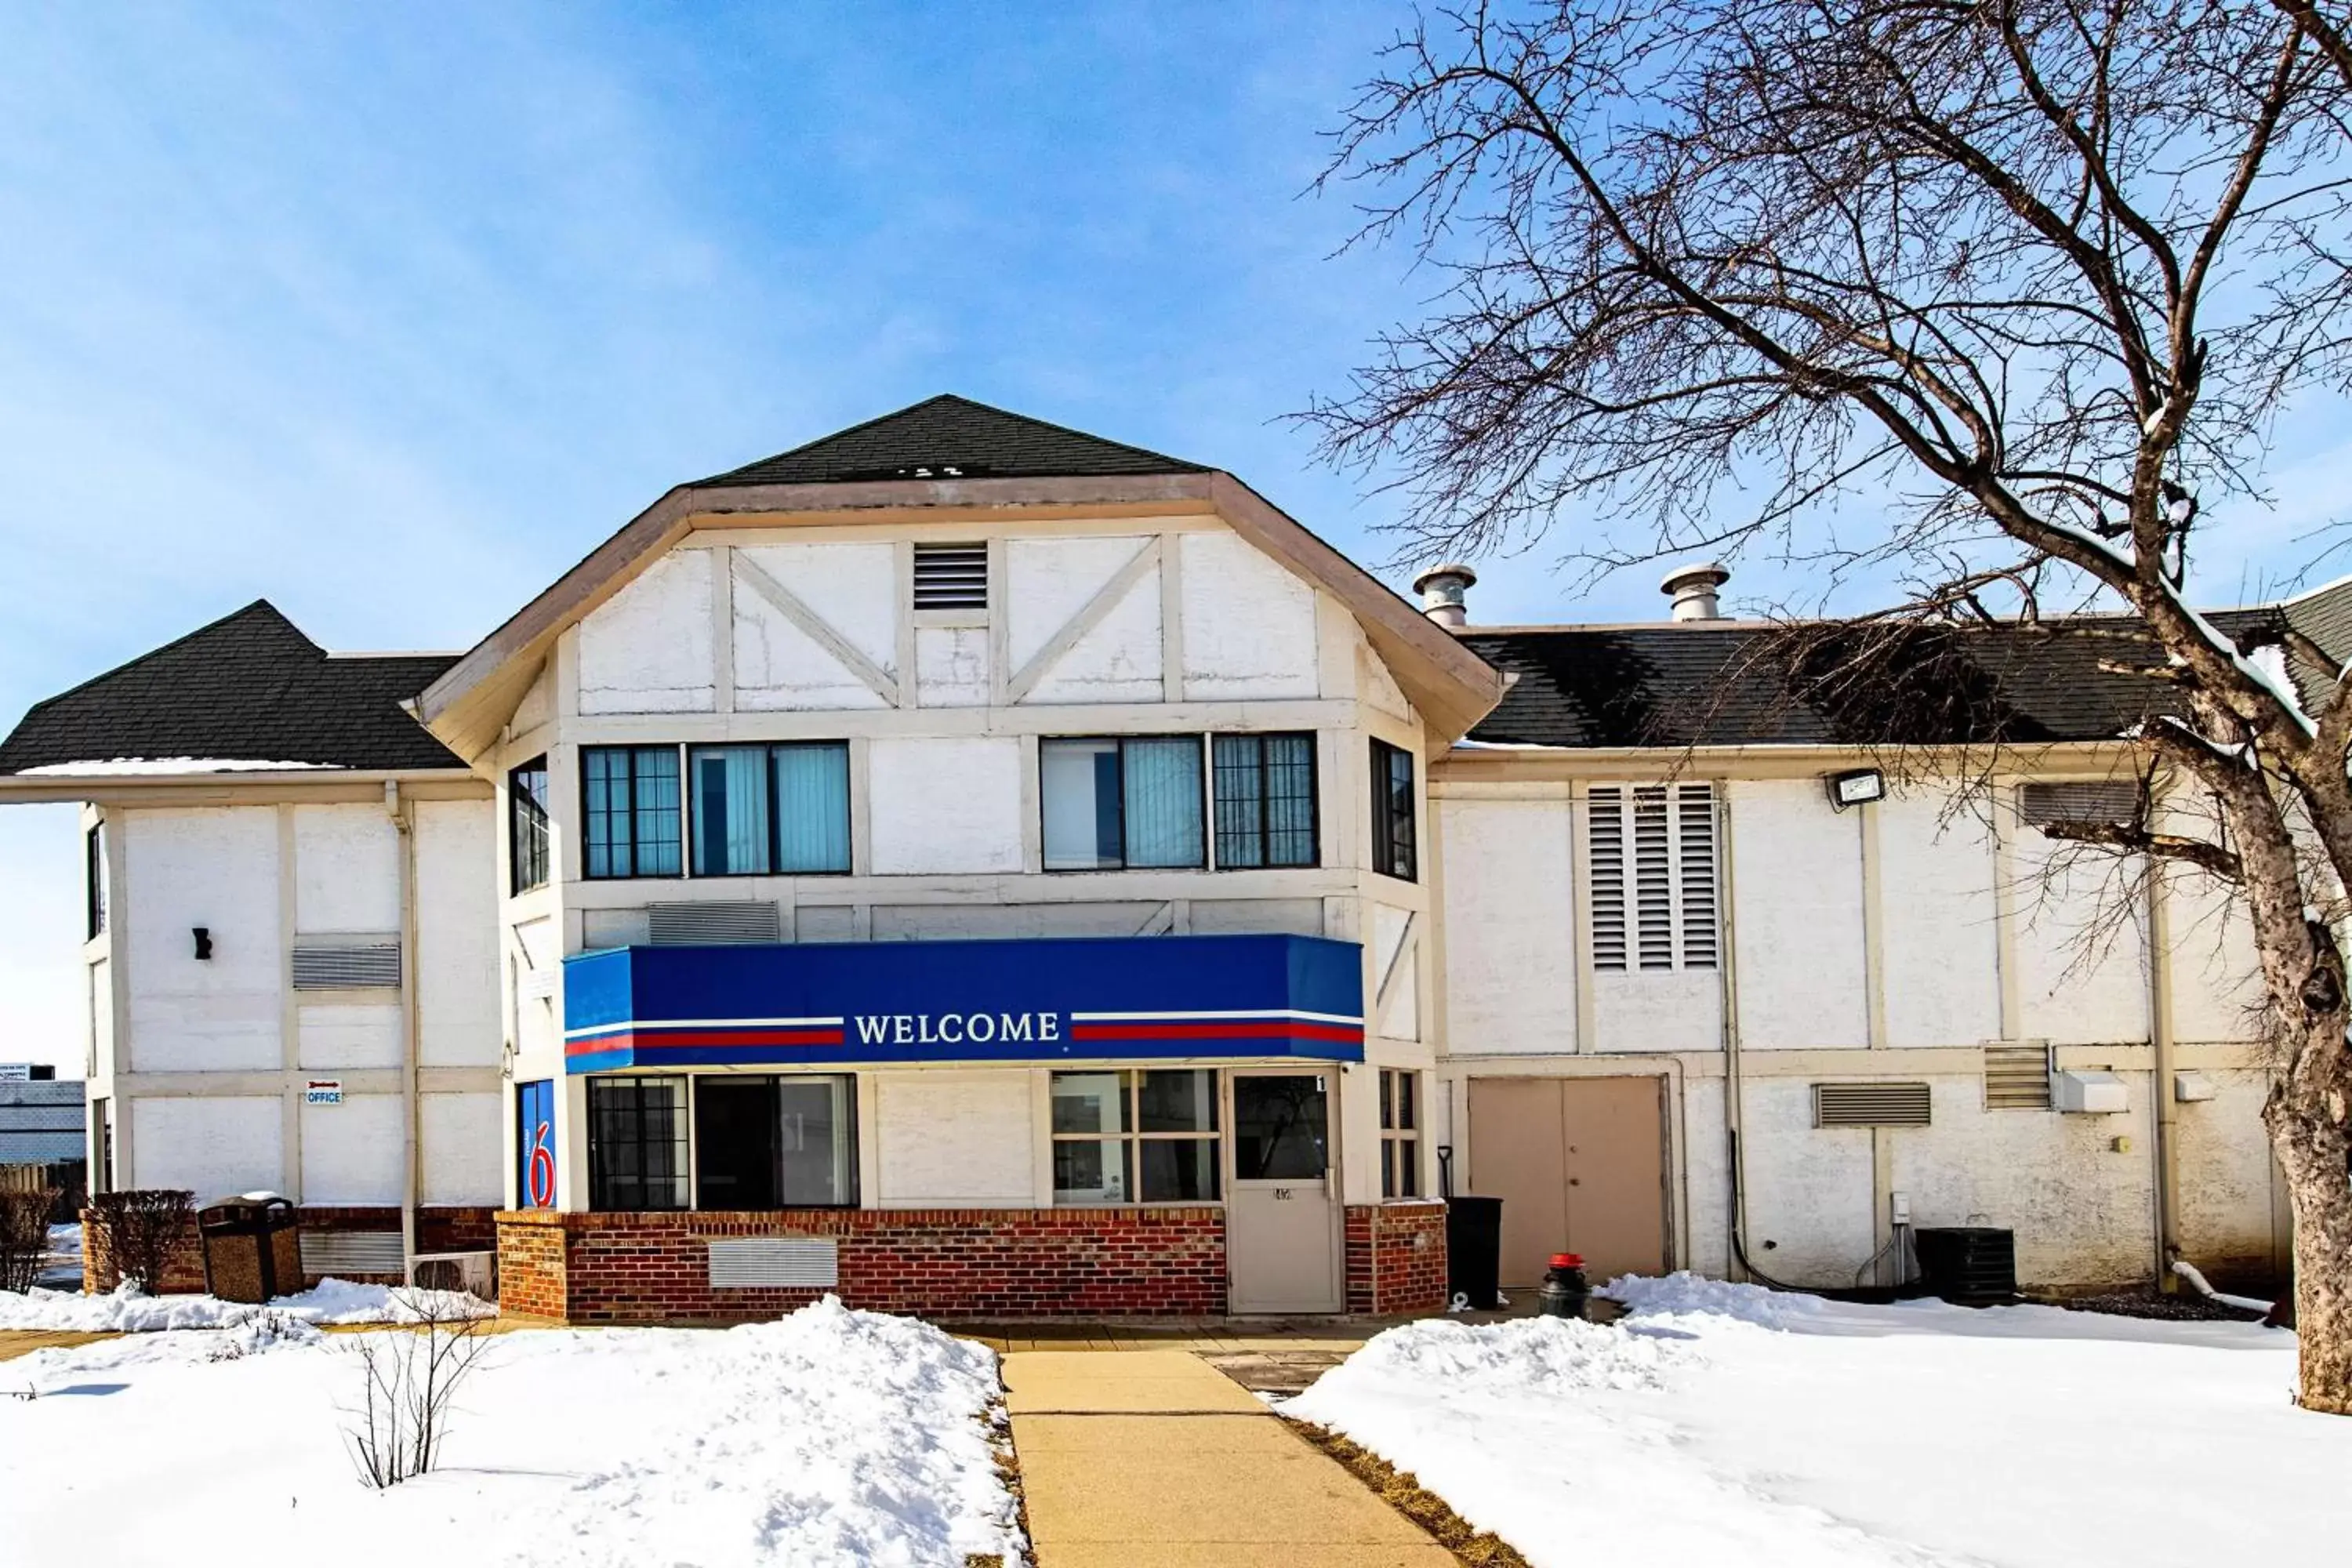 Property building, Winter in Motel 6-Palatine, IL - Chicago Northwest